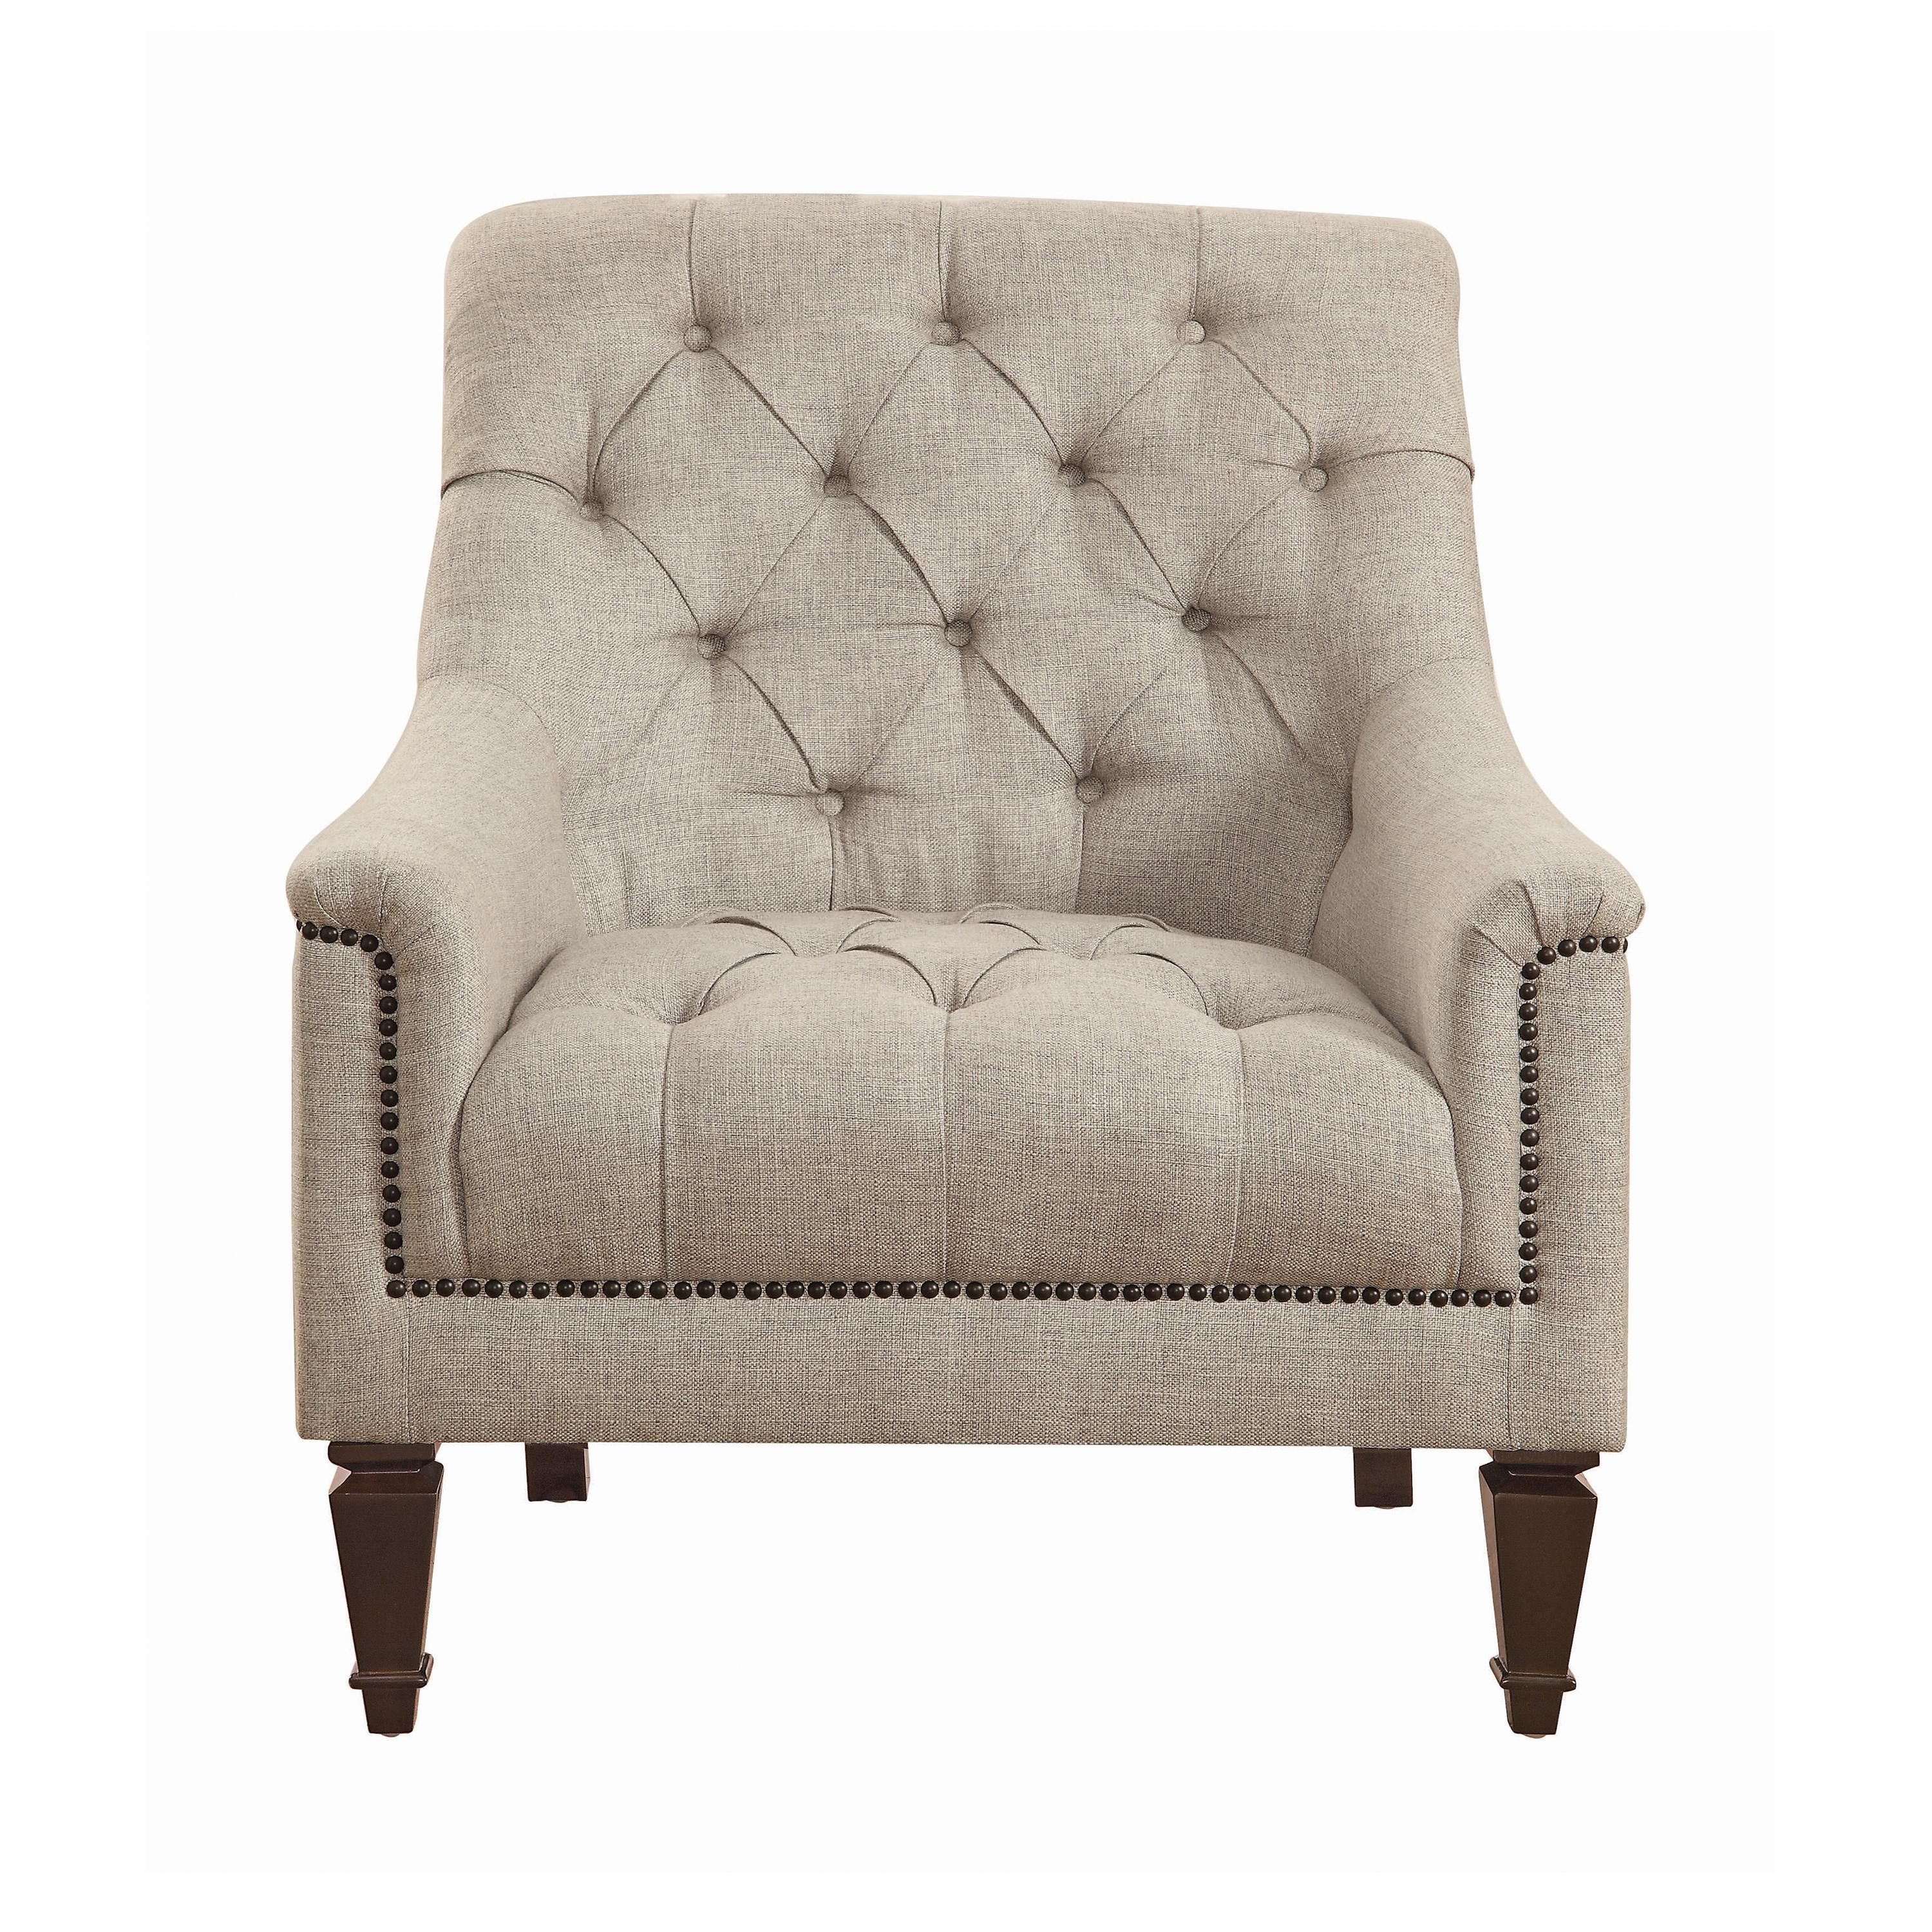 Classic Arm Chair 505643 Avonlea 505643 in Gray 